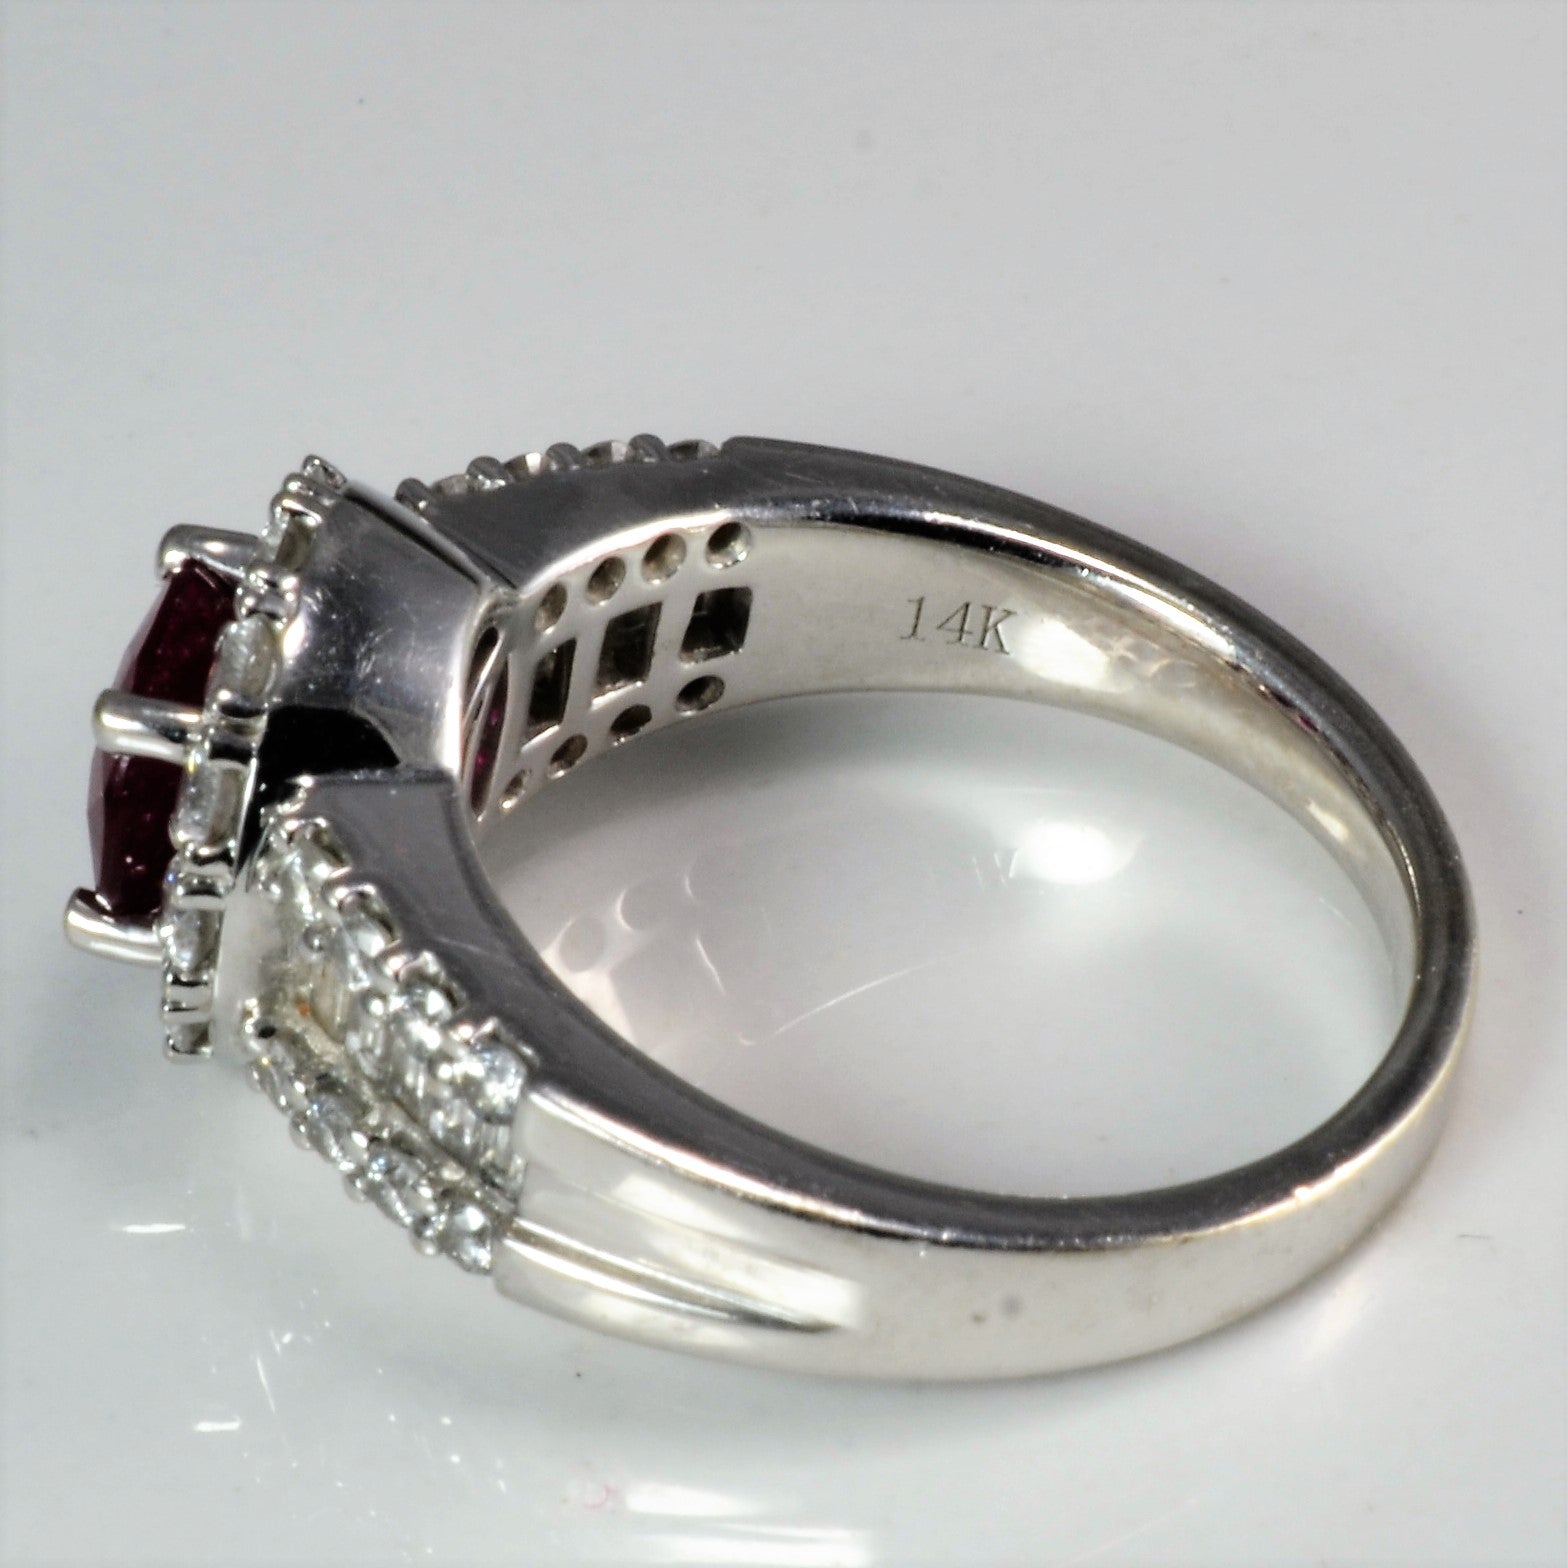 Diamond & Ruby Halo Engagement Ring | 0.75 ctw, SZ 6.5 |